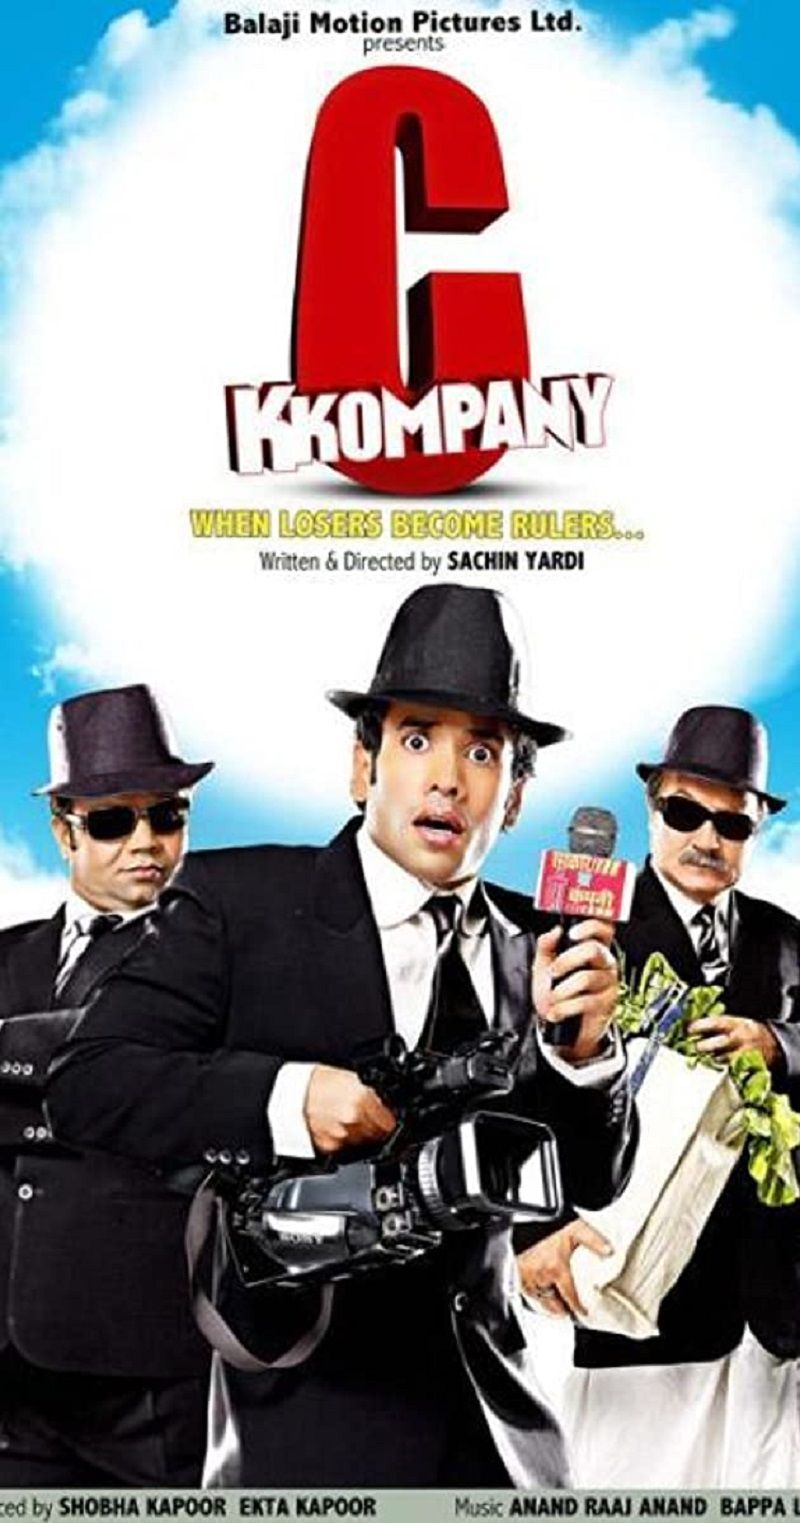 Poster of the movie 'CKkompany'